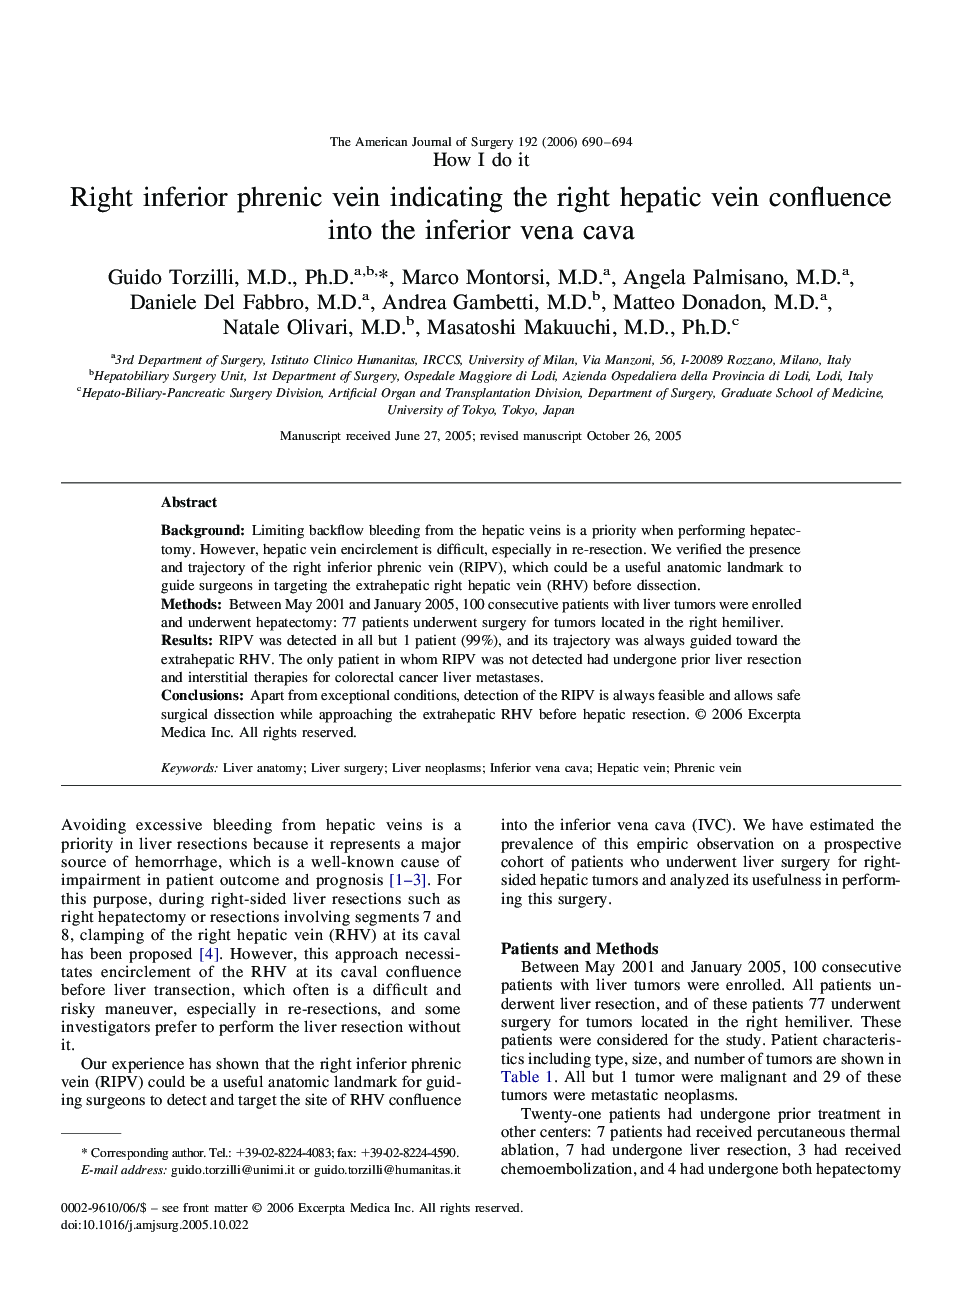 Right inferior phrenic vein indicating the right hepatic vein confluence into the inferior vena cava